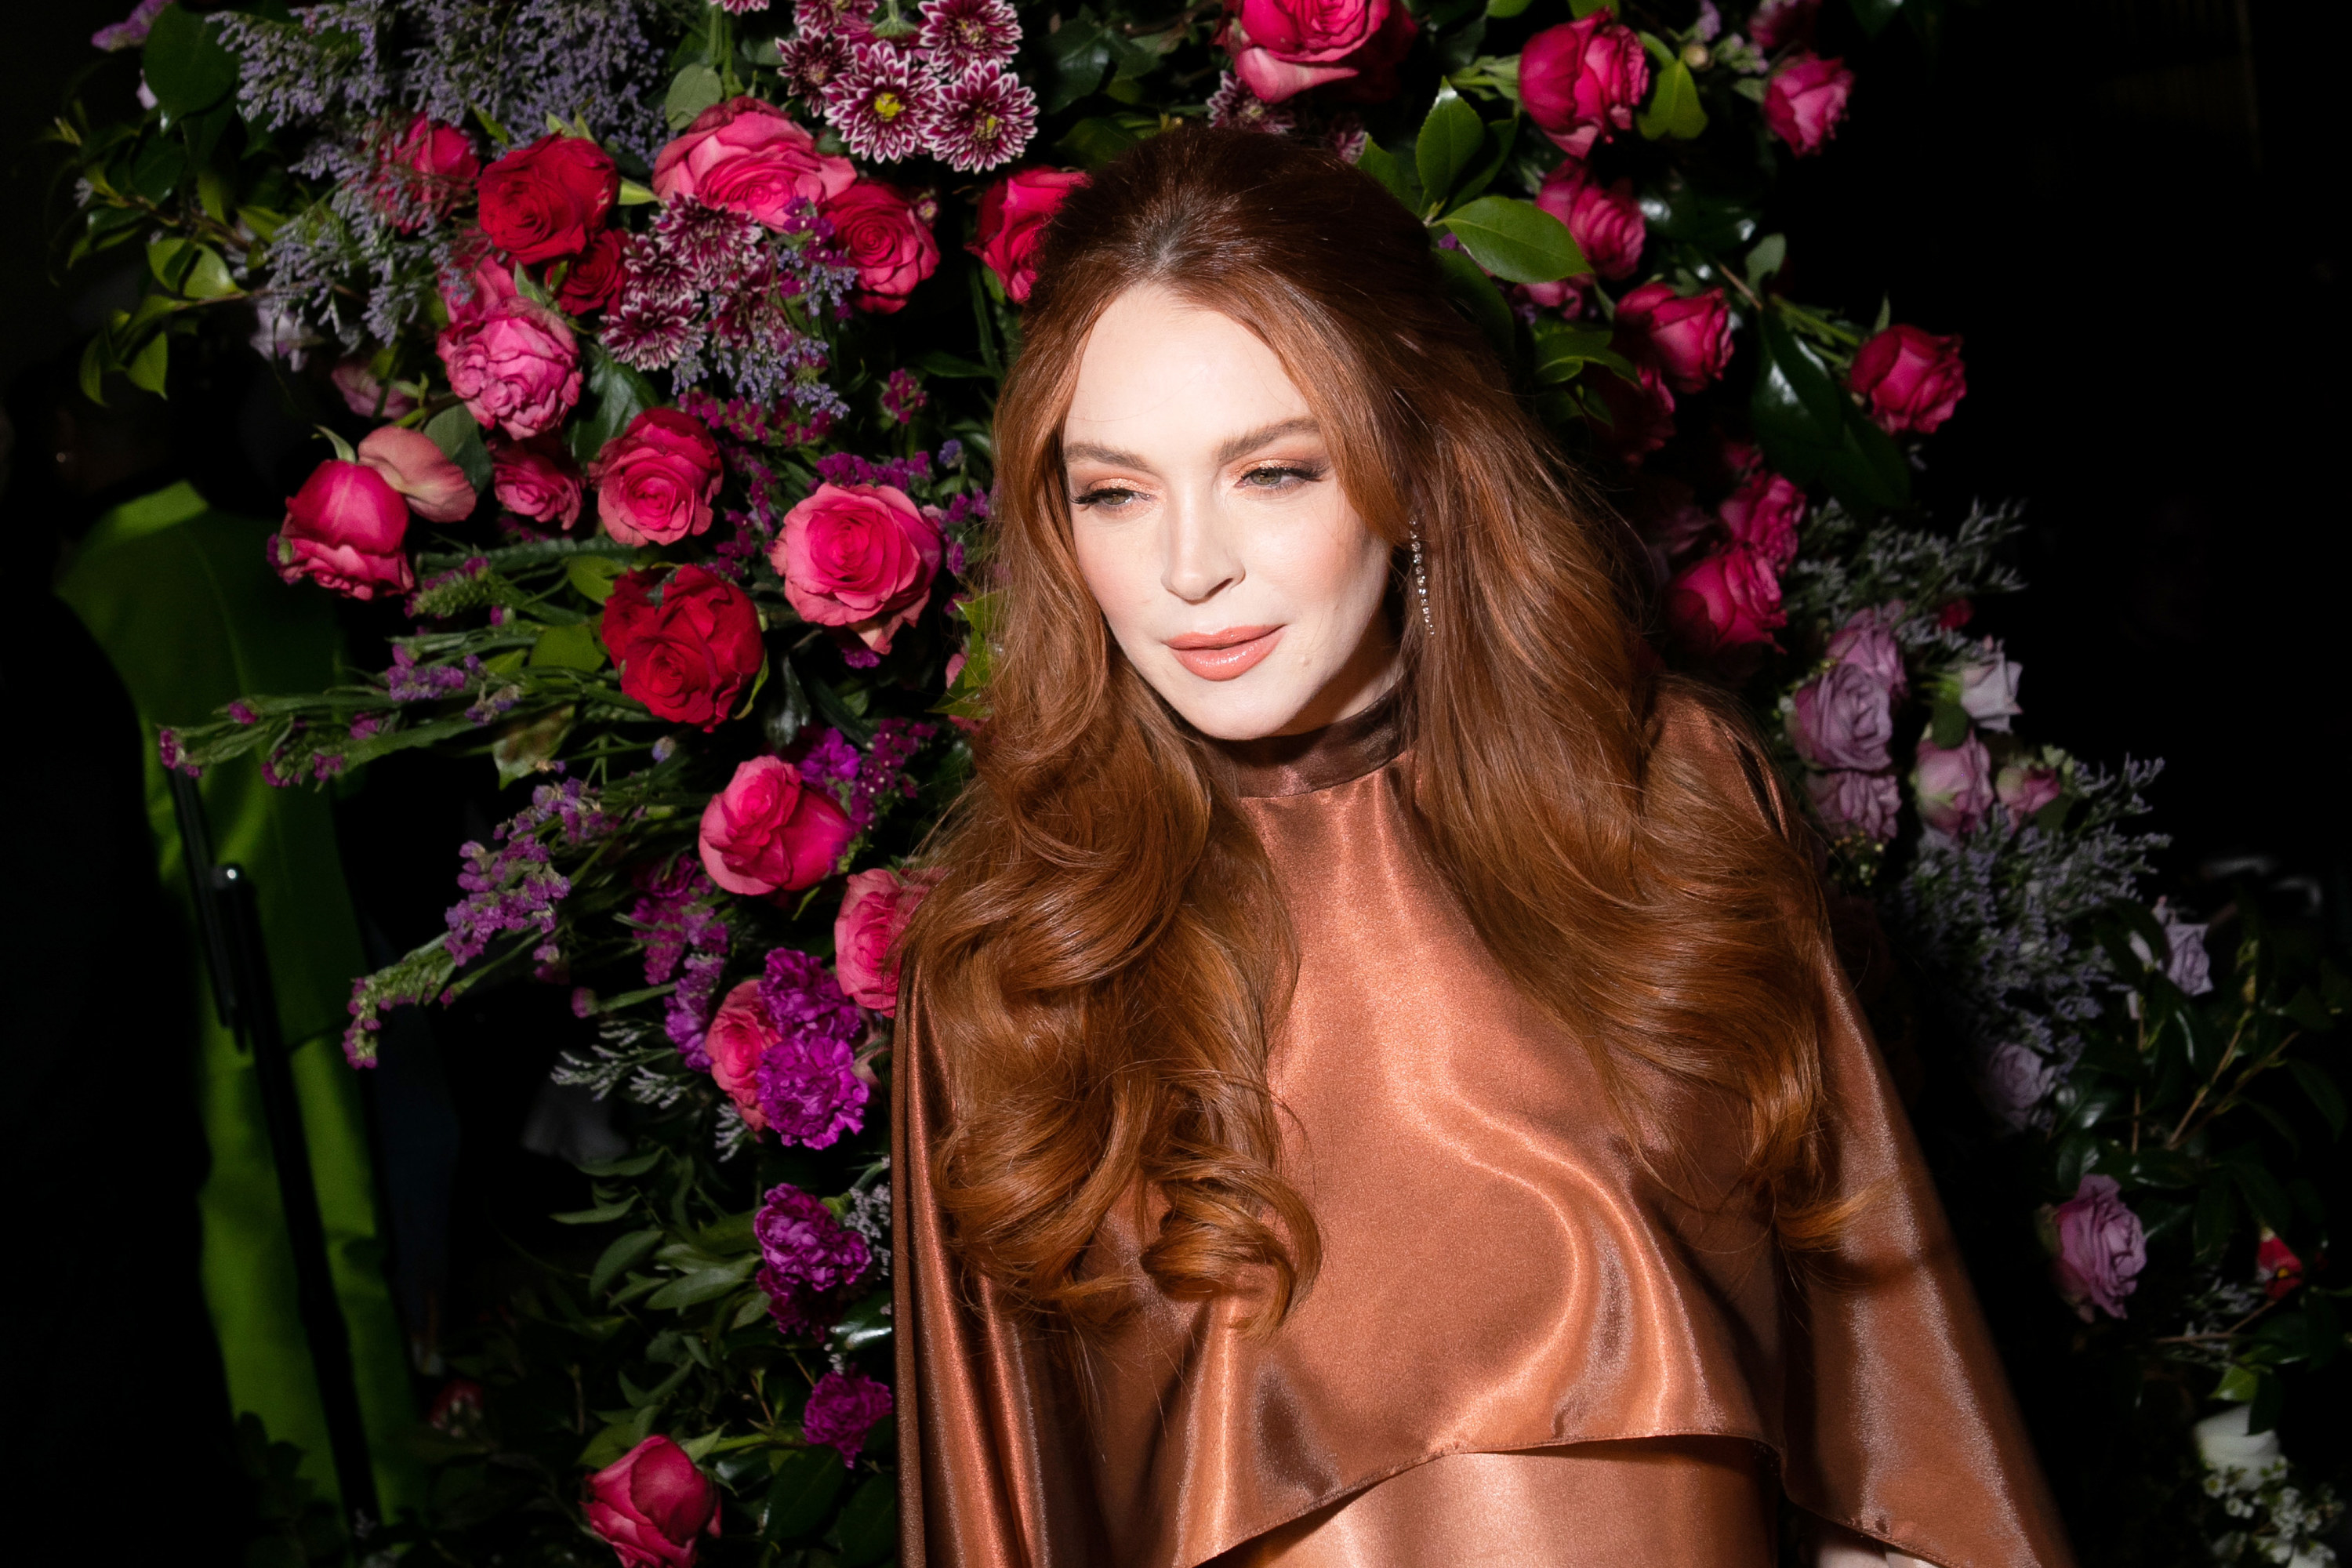 Lindsay Lohan attends red carpet event